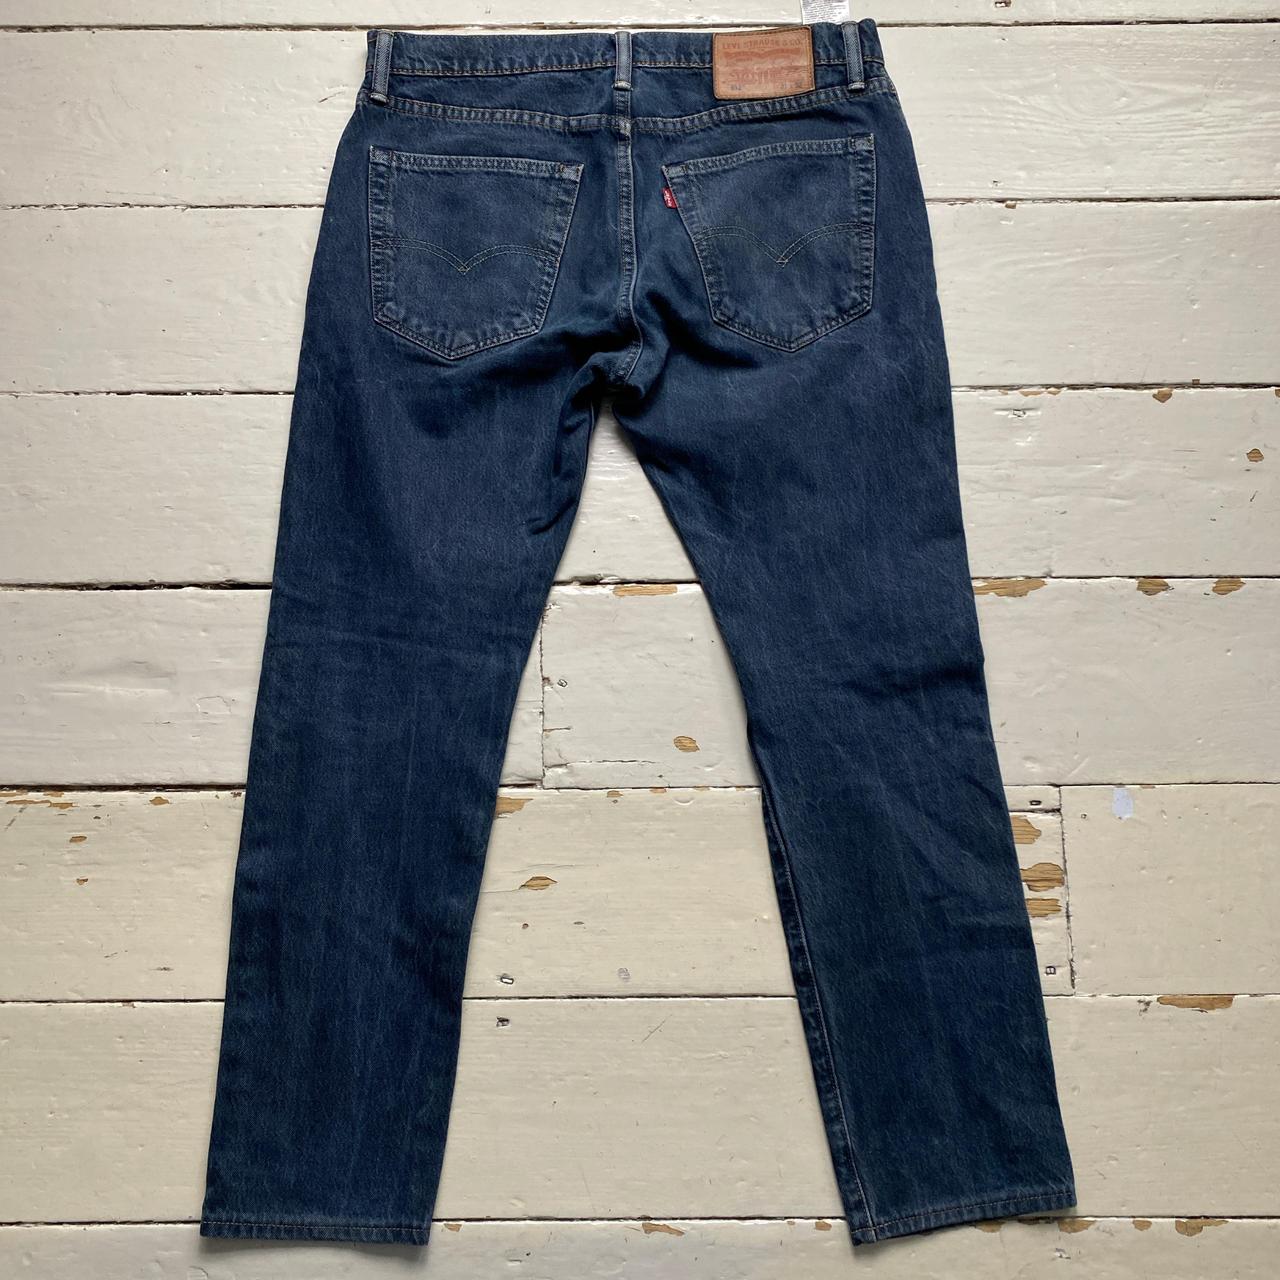 Levis 512 Navy Slim Straight Jeans